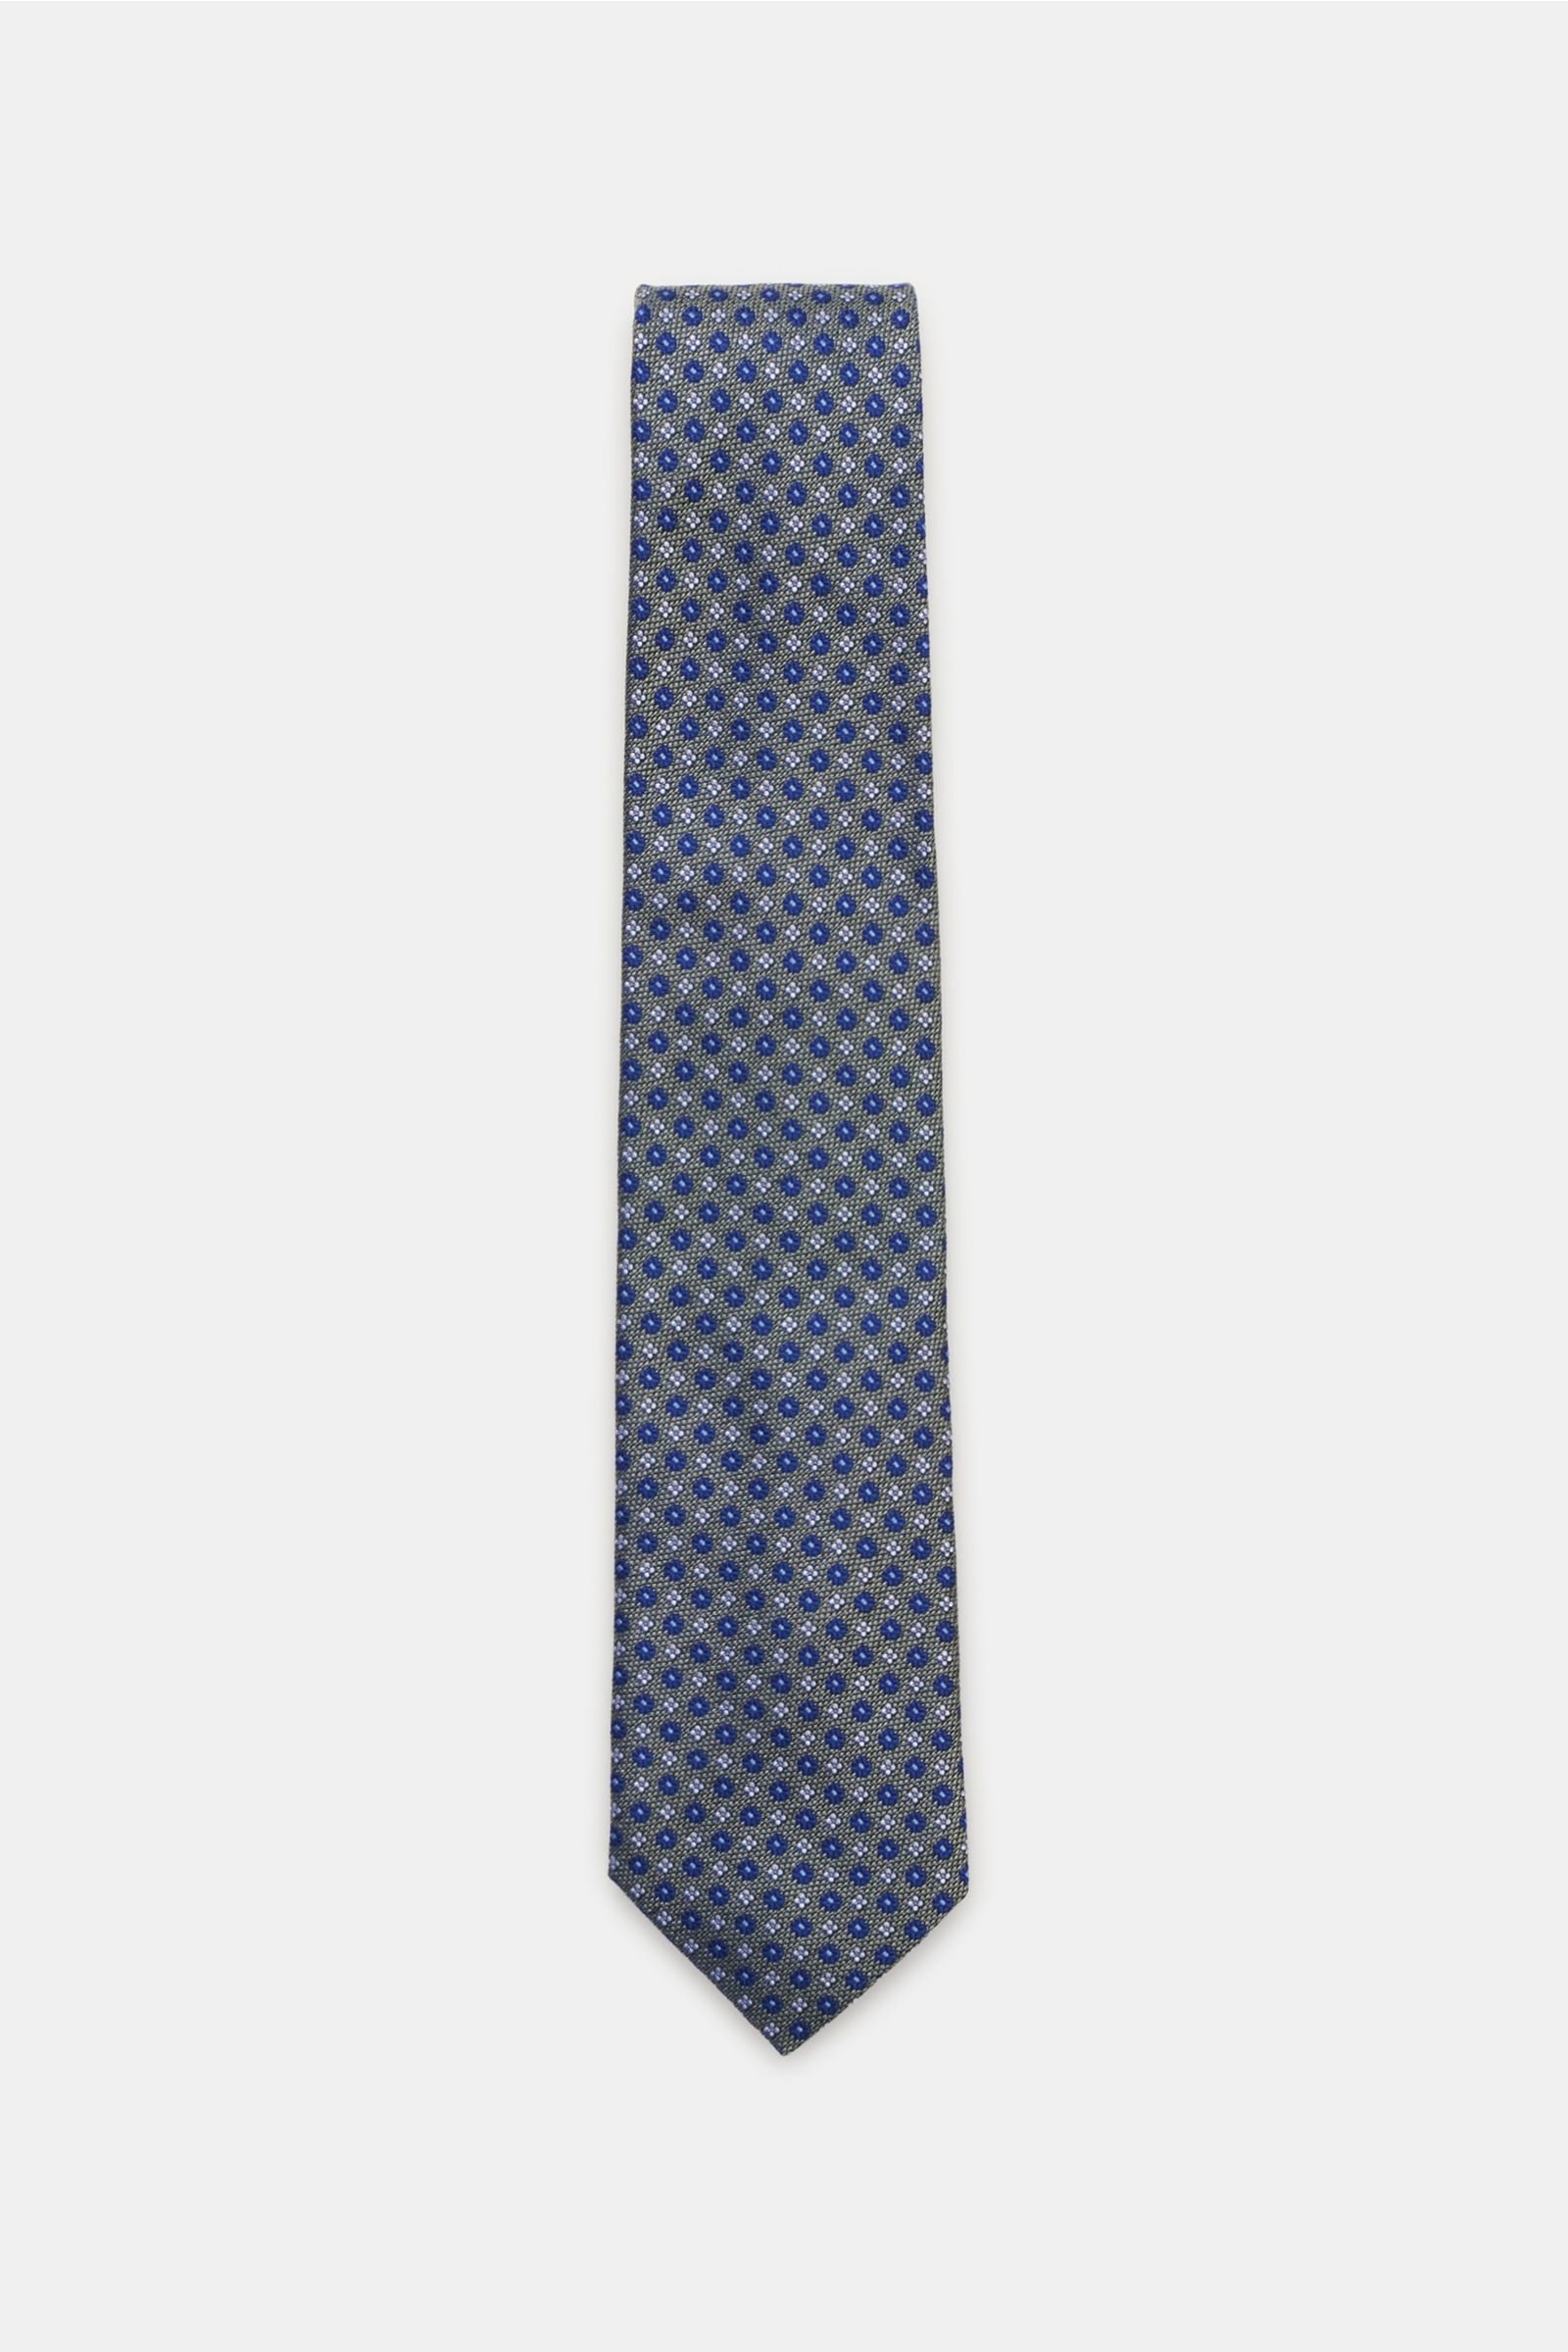 Silk tie navy/olive patterned